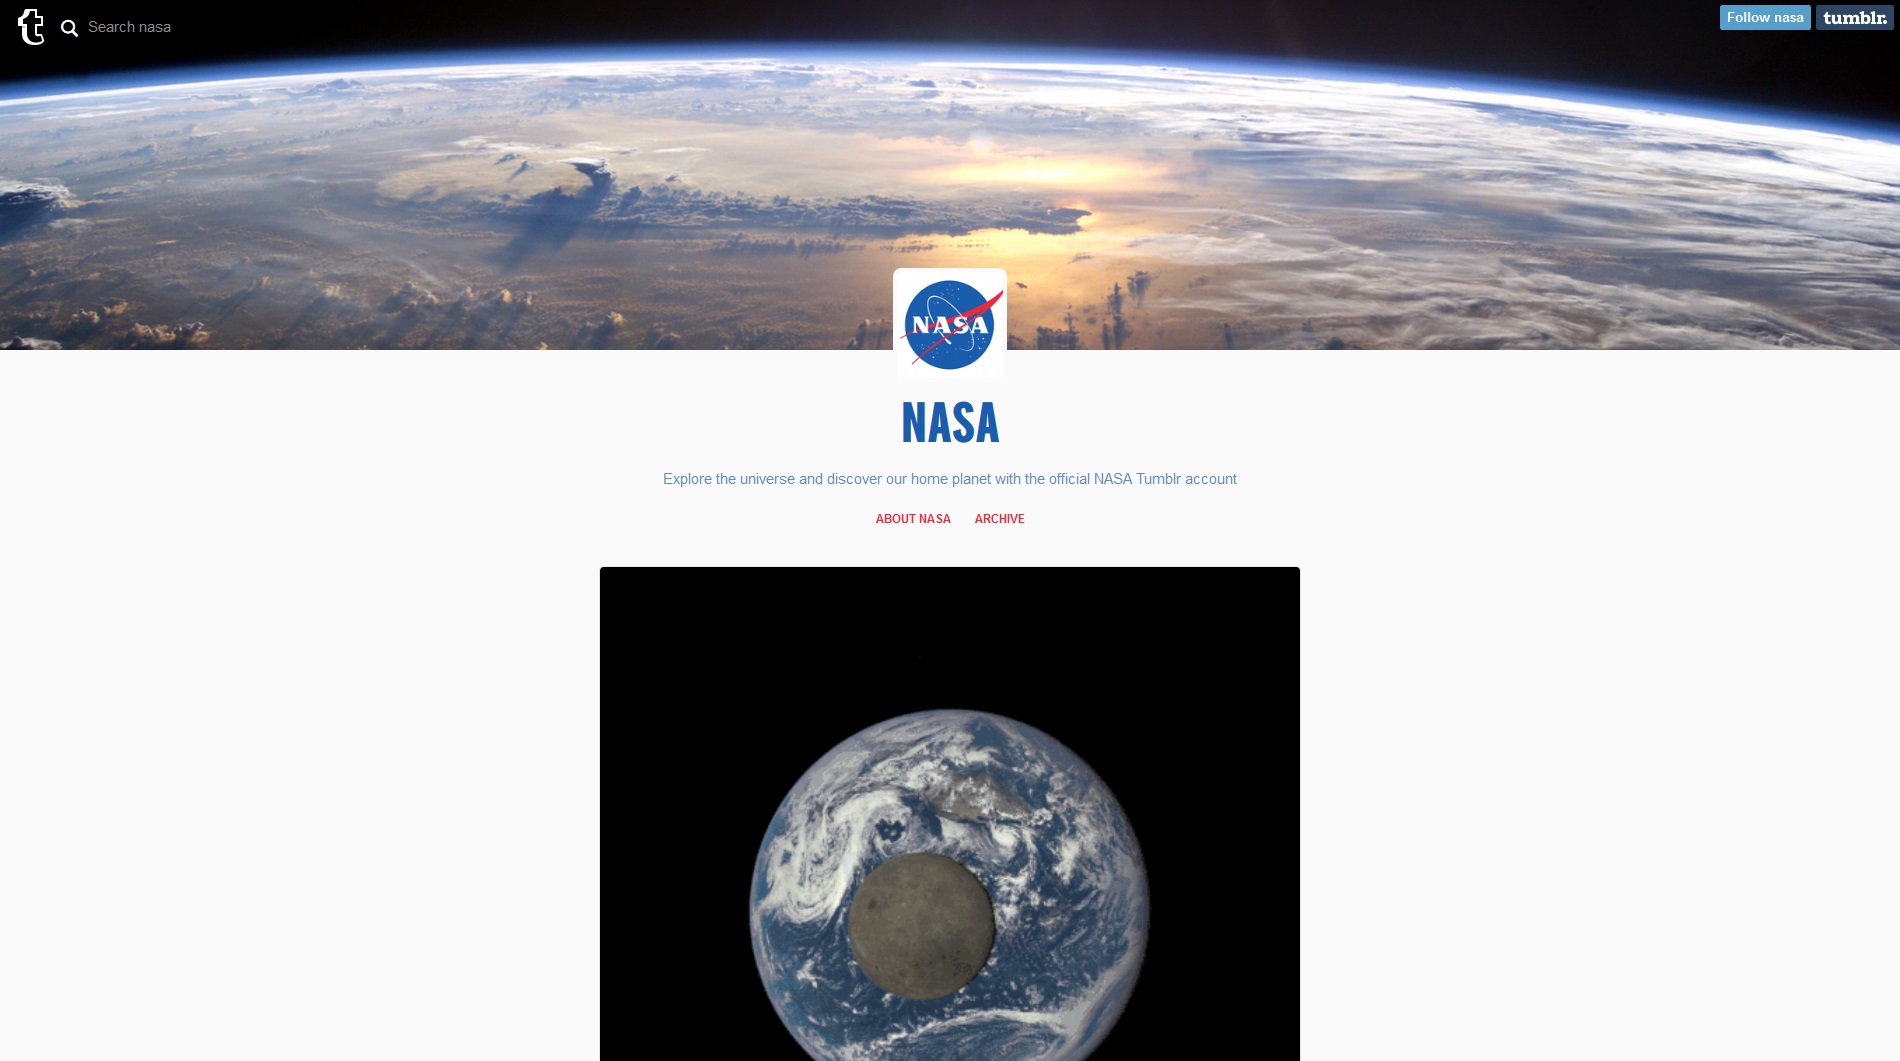 NASA now is on Tumblr.  NASA image

